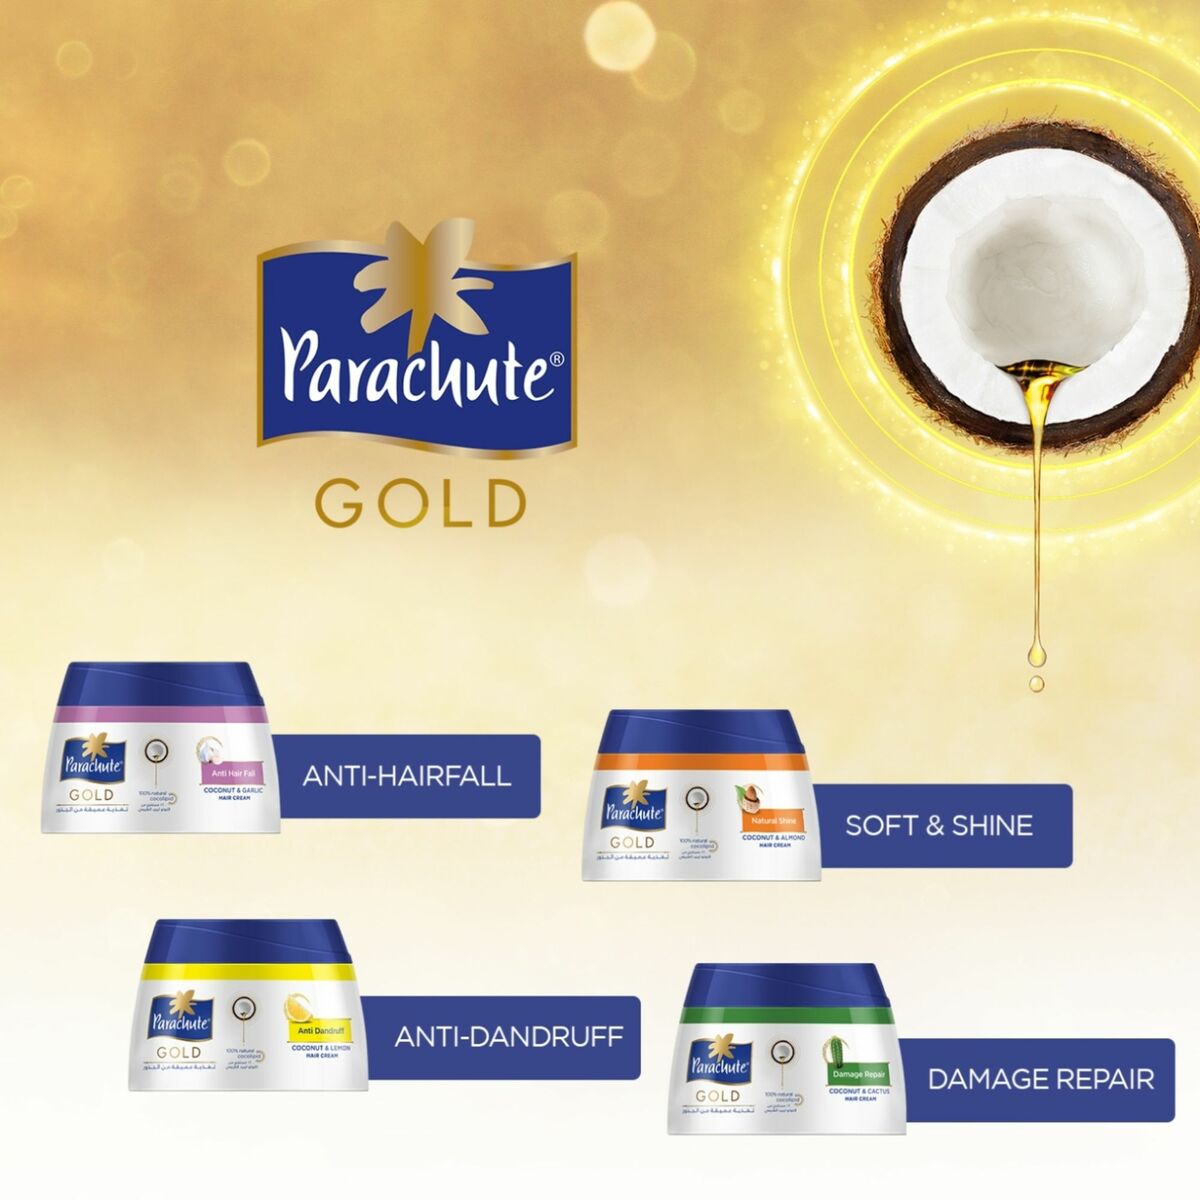 Parachute Gold Coconut & Lemon Hair Cream 210 ml